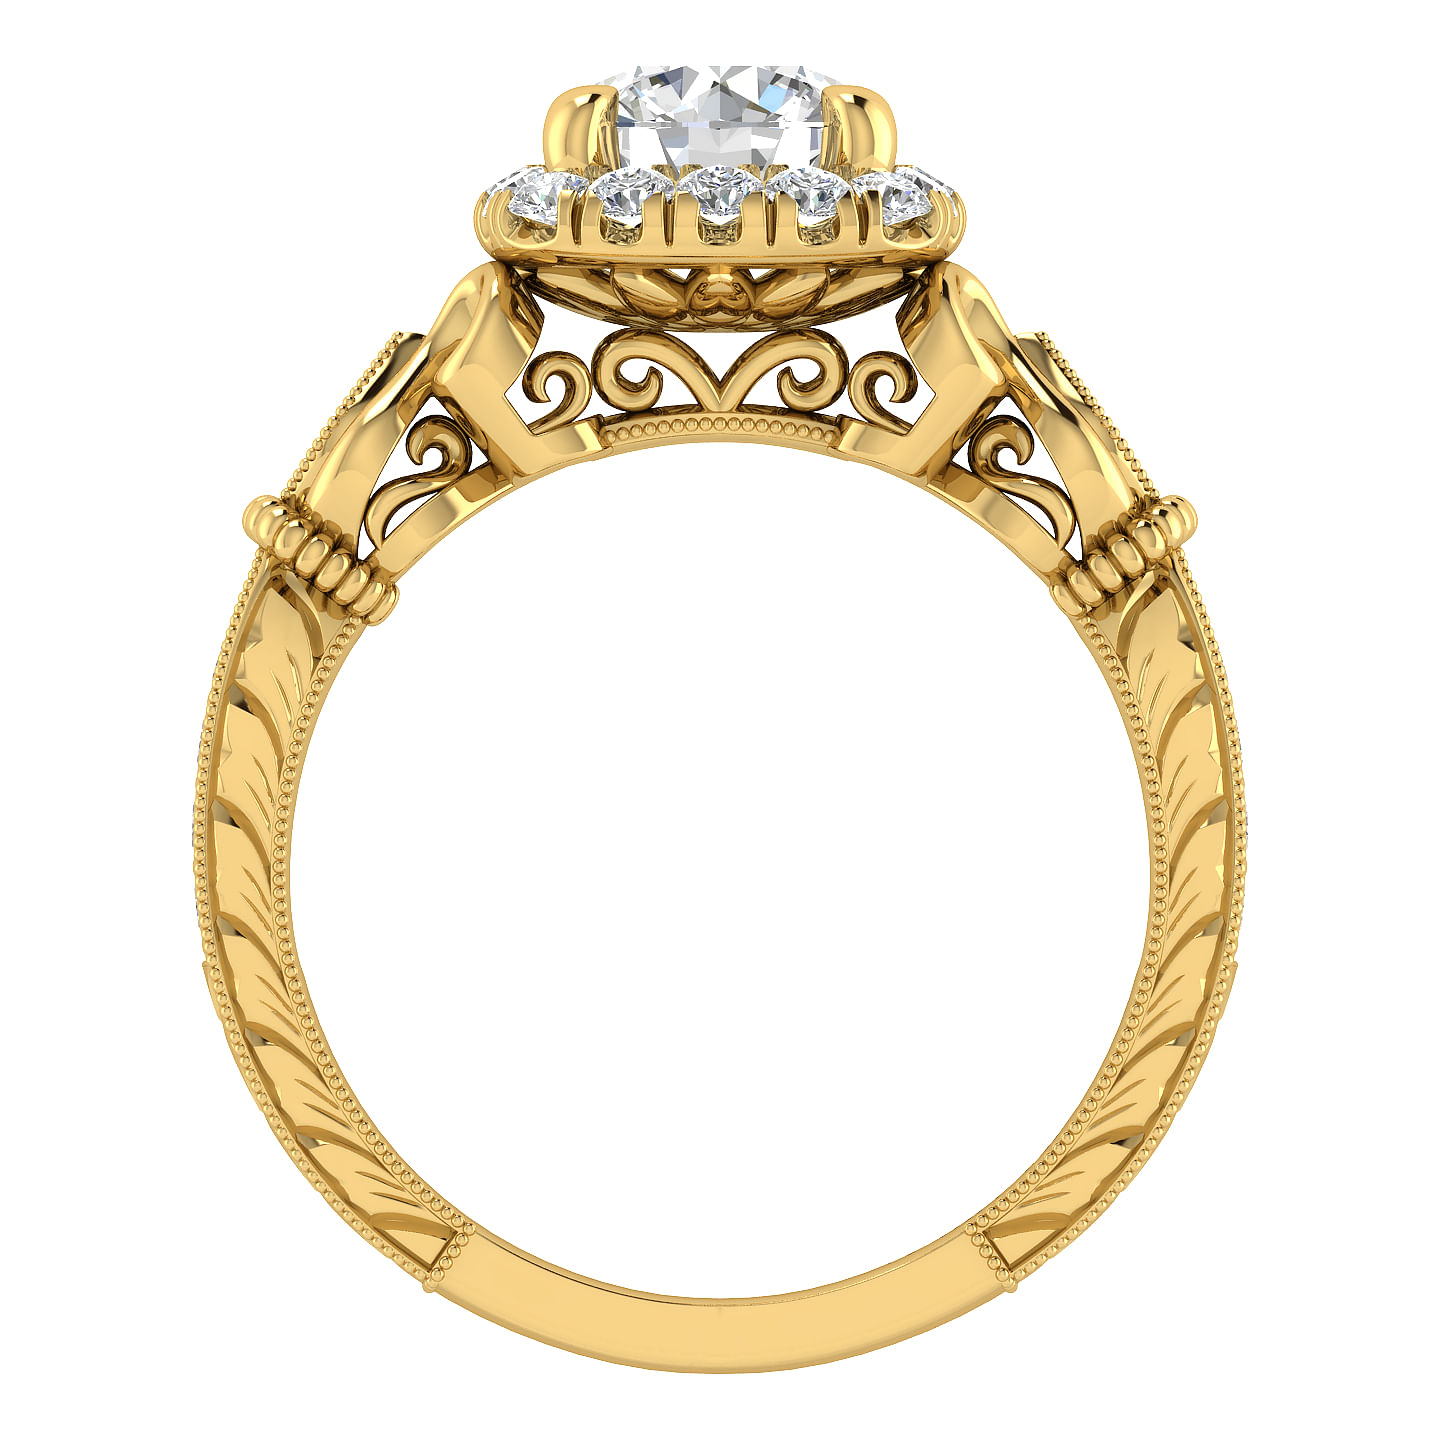 Vintage Inspired 18K Yellow Gold Round Halo Diamond Engagement Ring